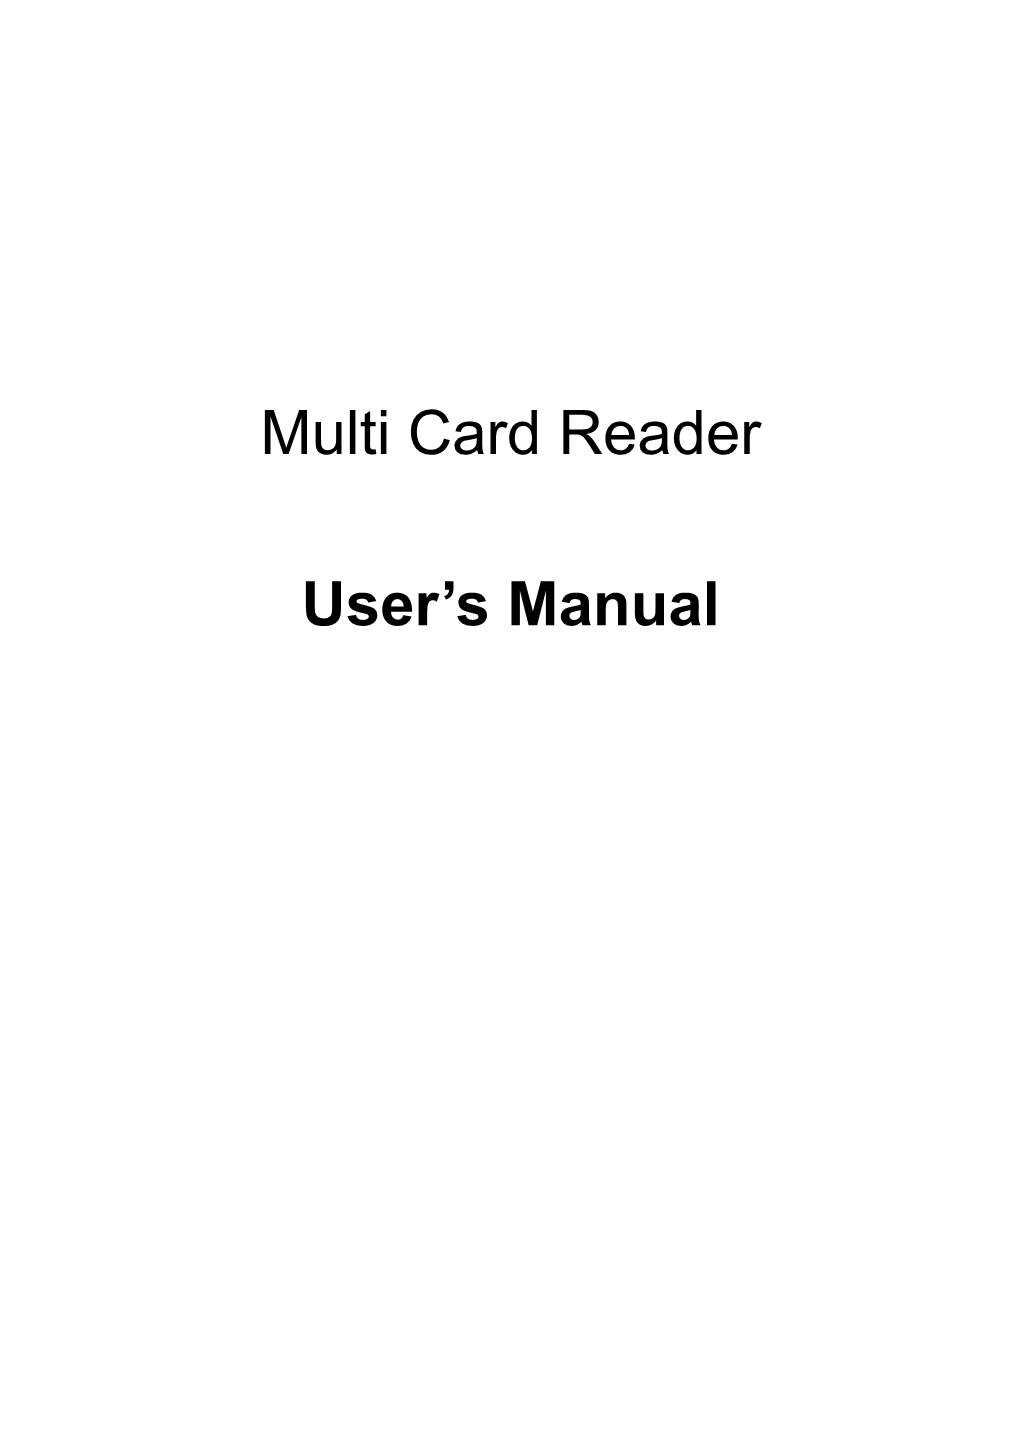 Multi Card Reader User's Manual